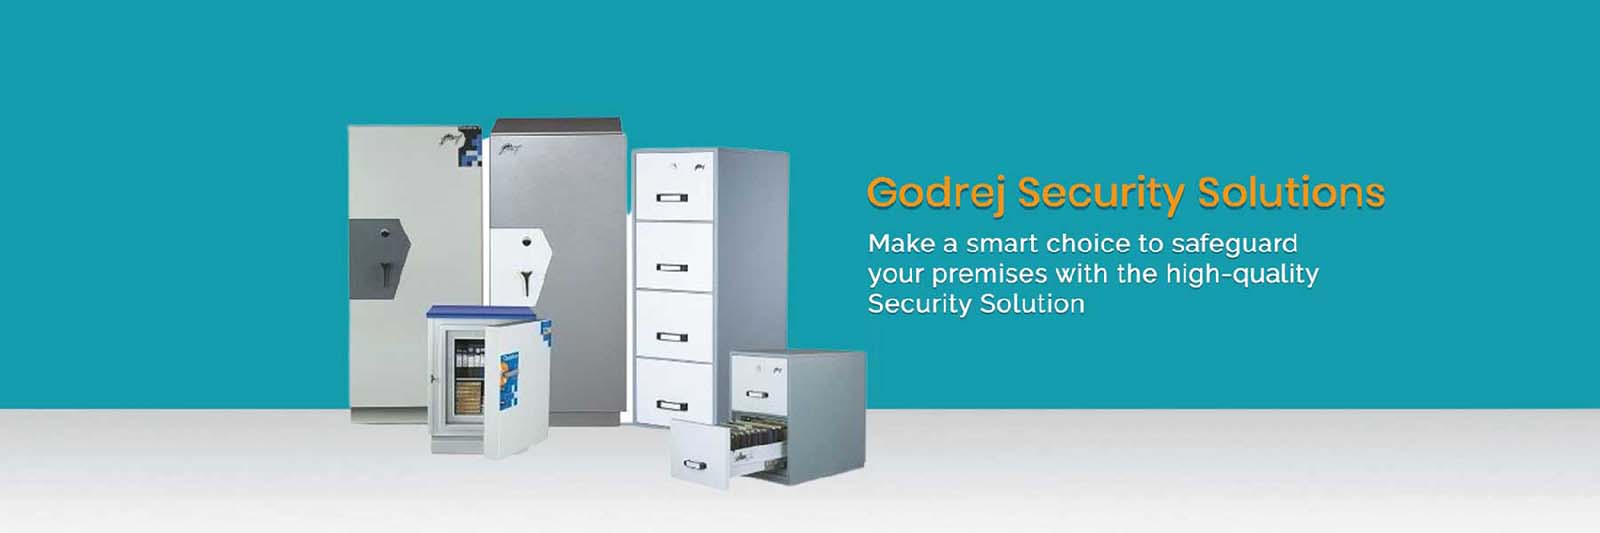 Godrej Security Solutions in Akshar Dham